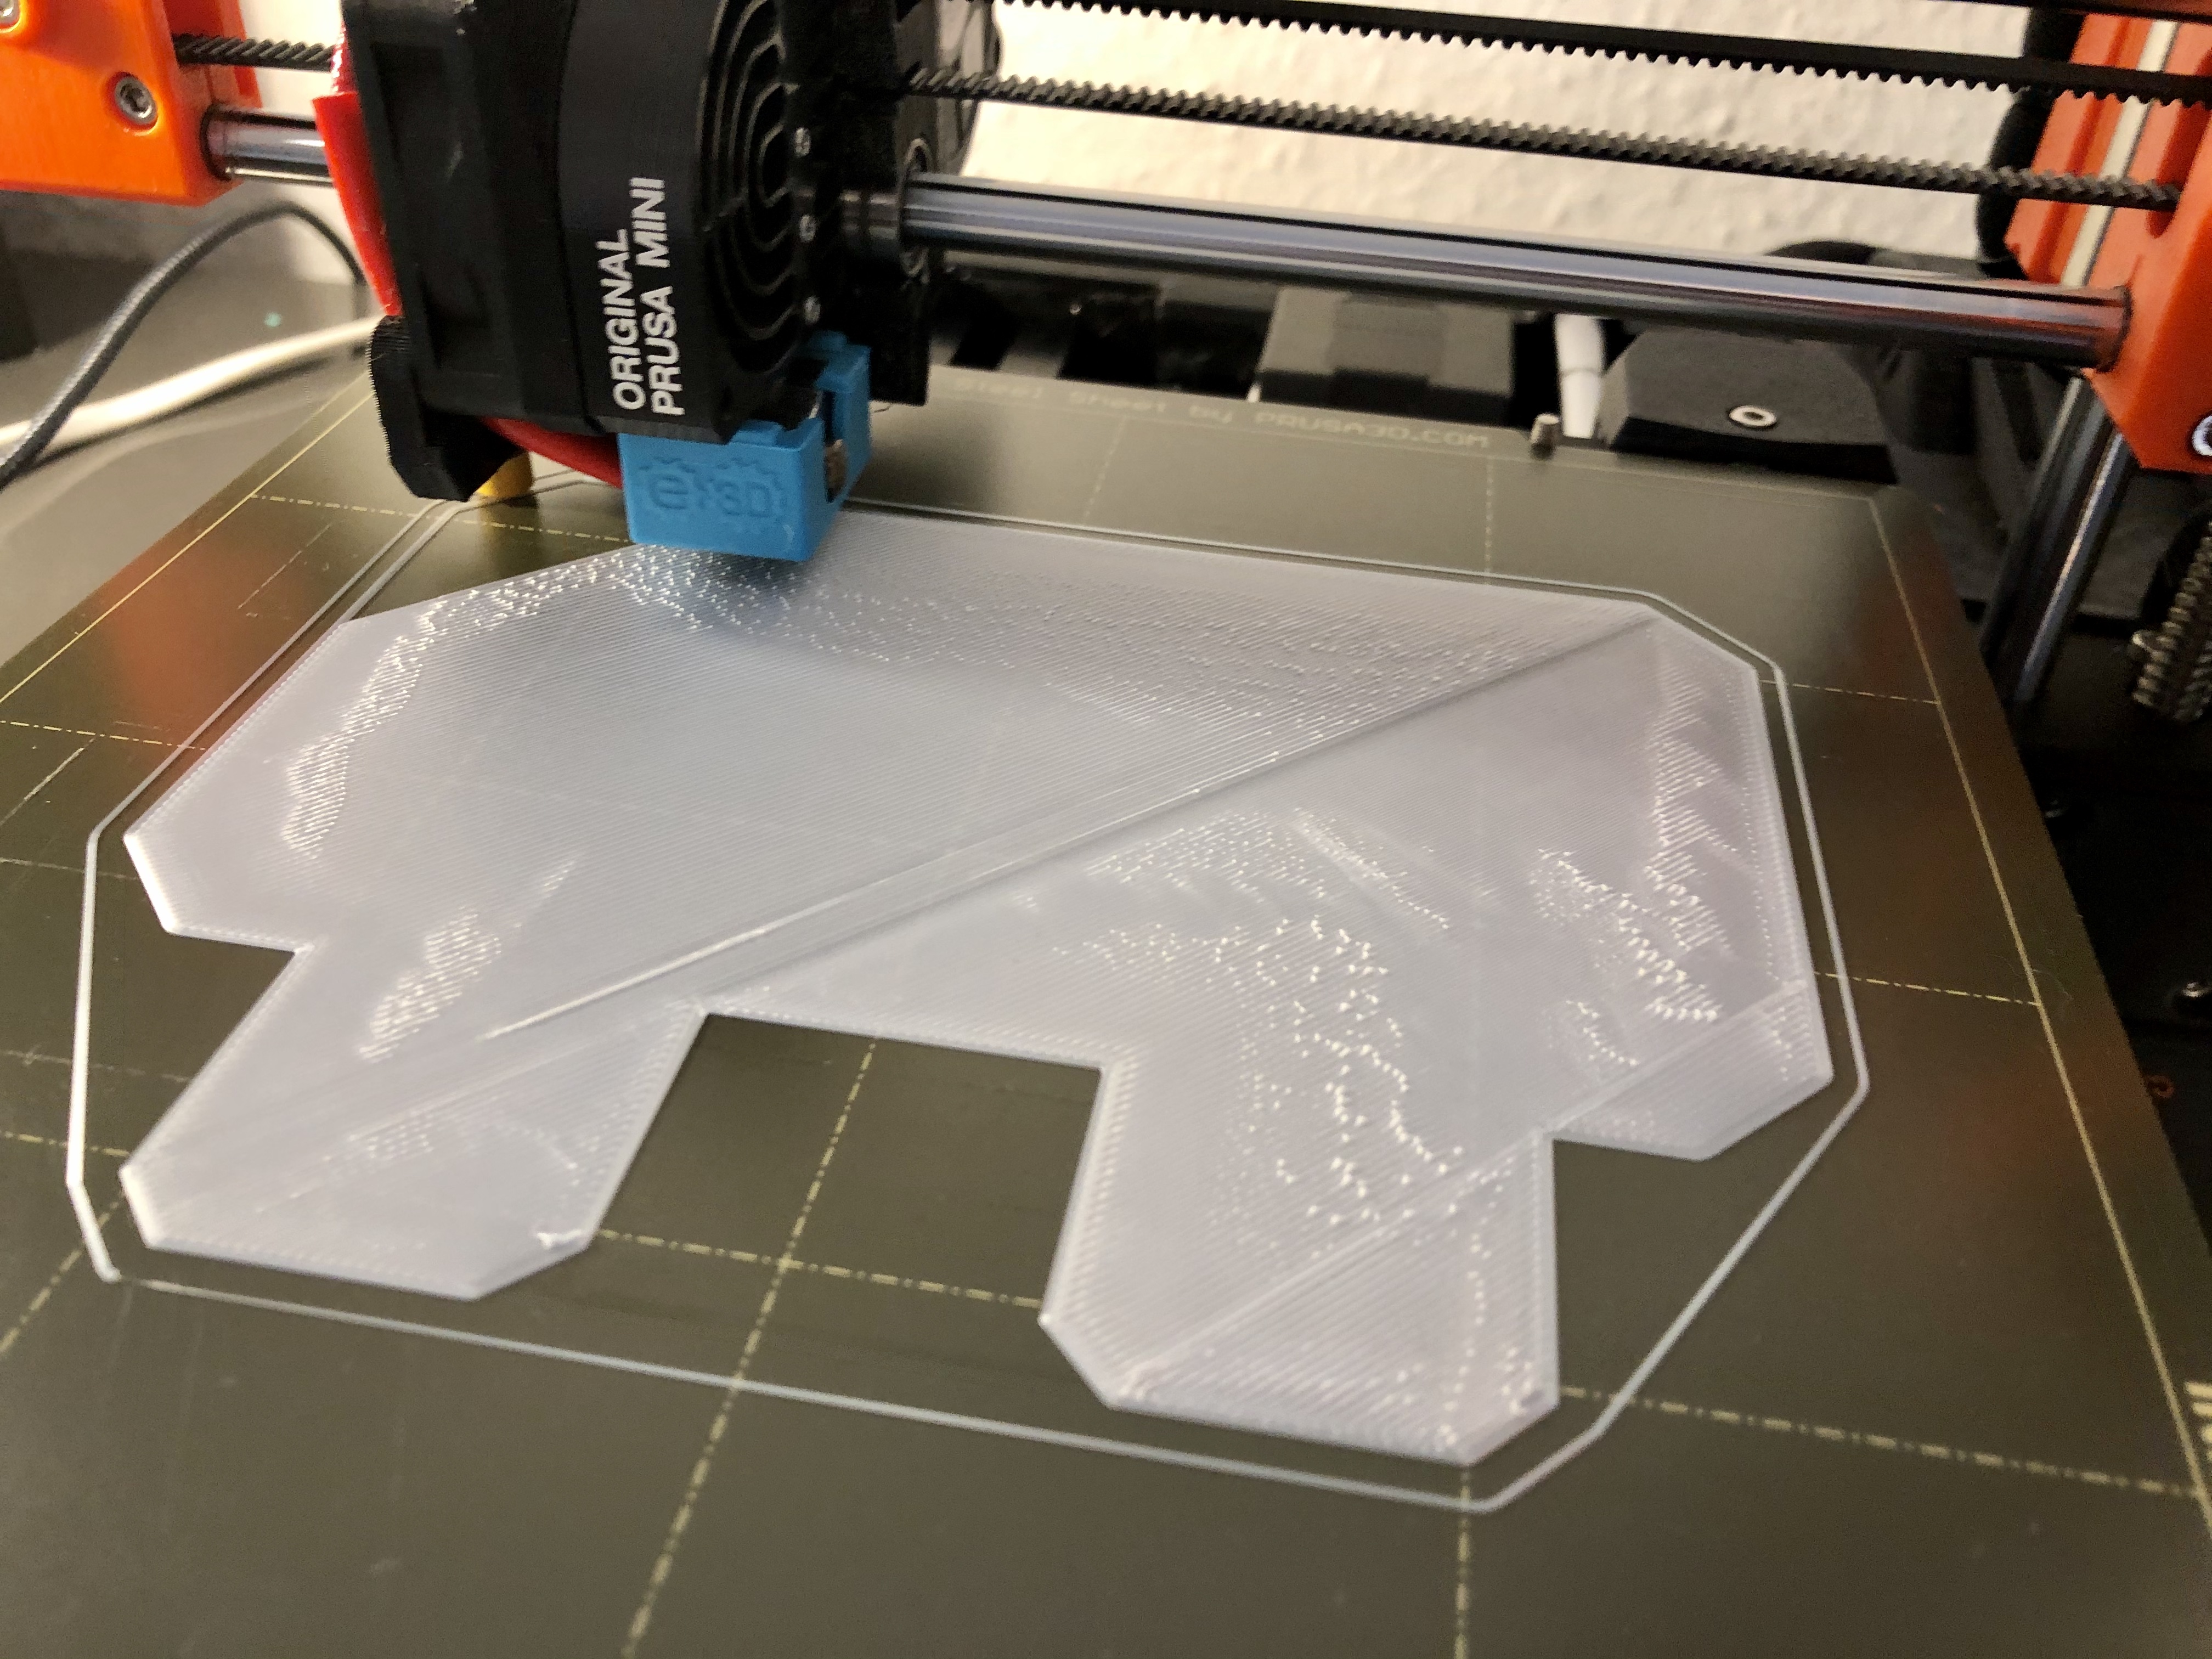 Blob on preheat – How do I print this? (Printing help) – Prusa3D Forum